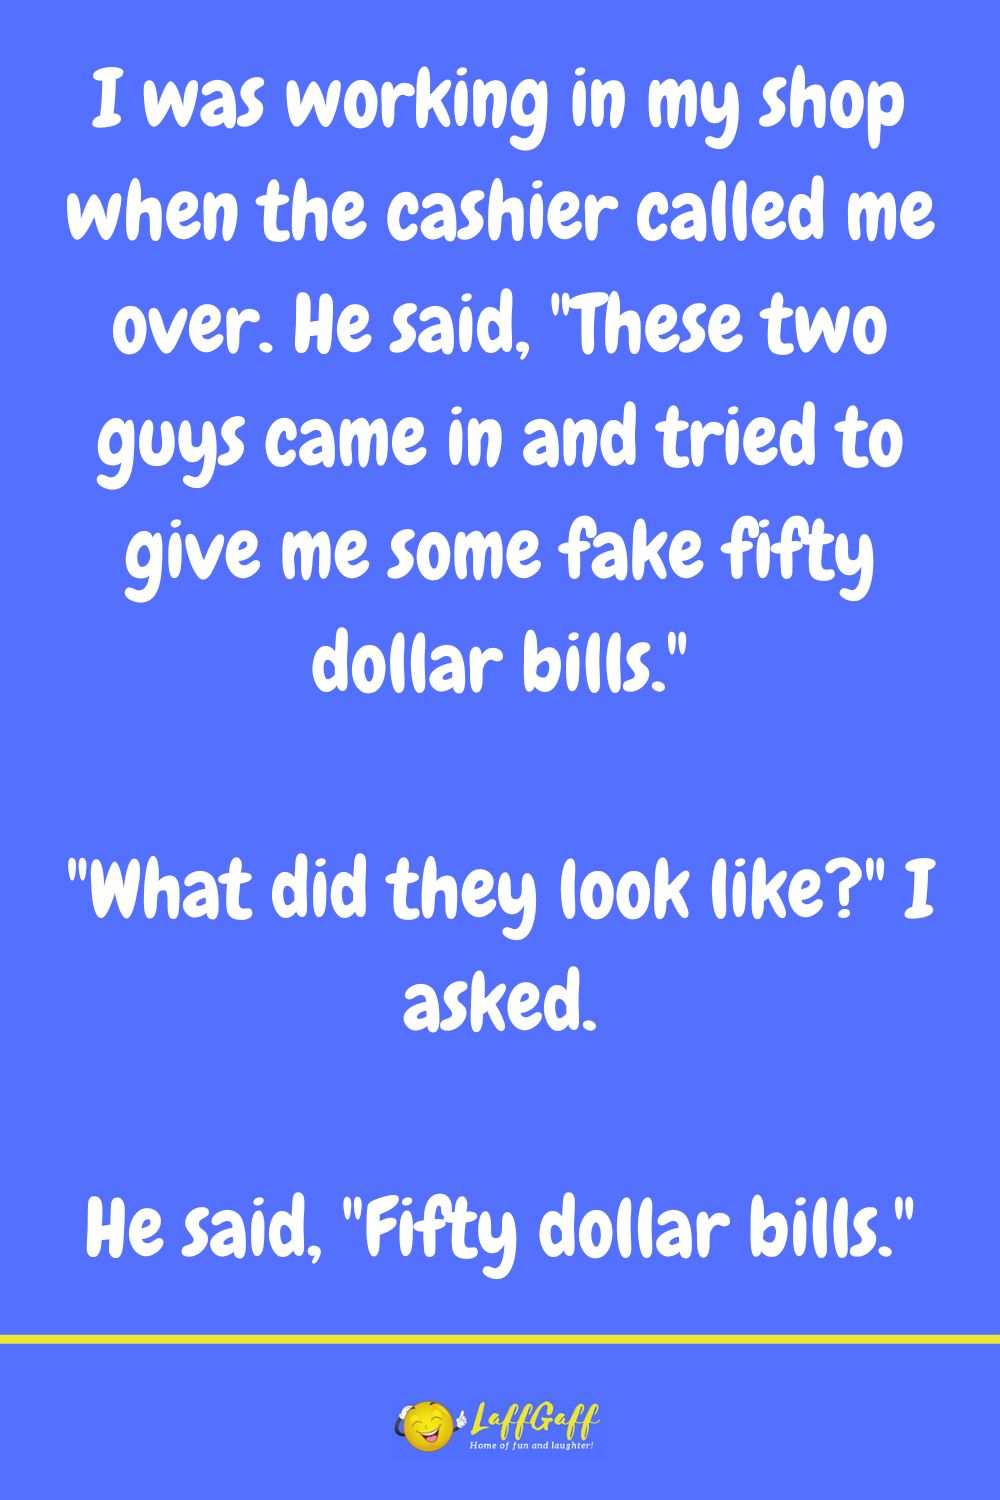 Fake bills joke from LaffGaff.